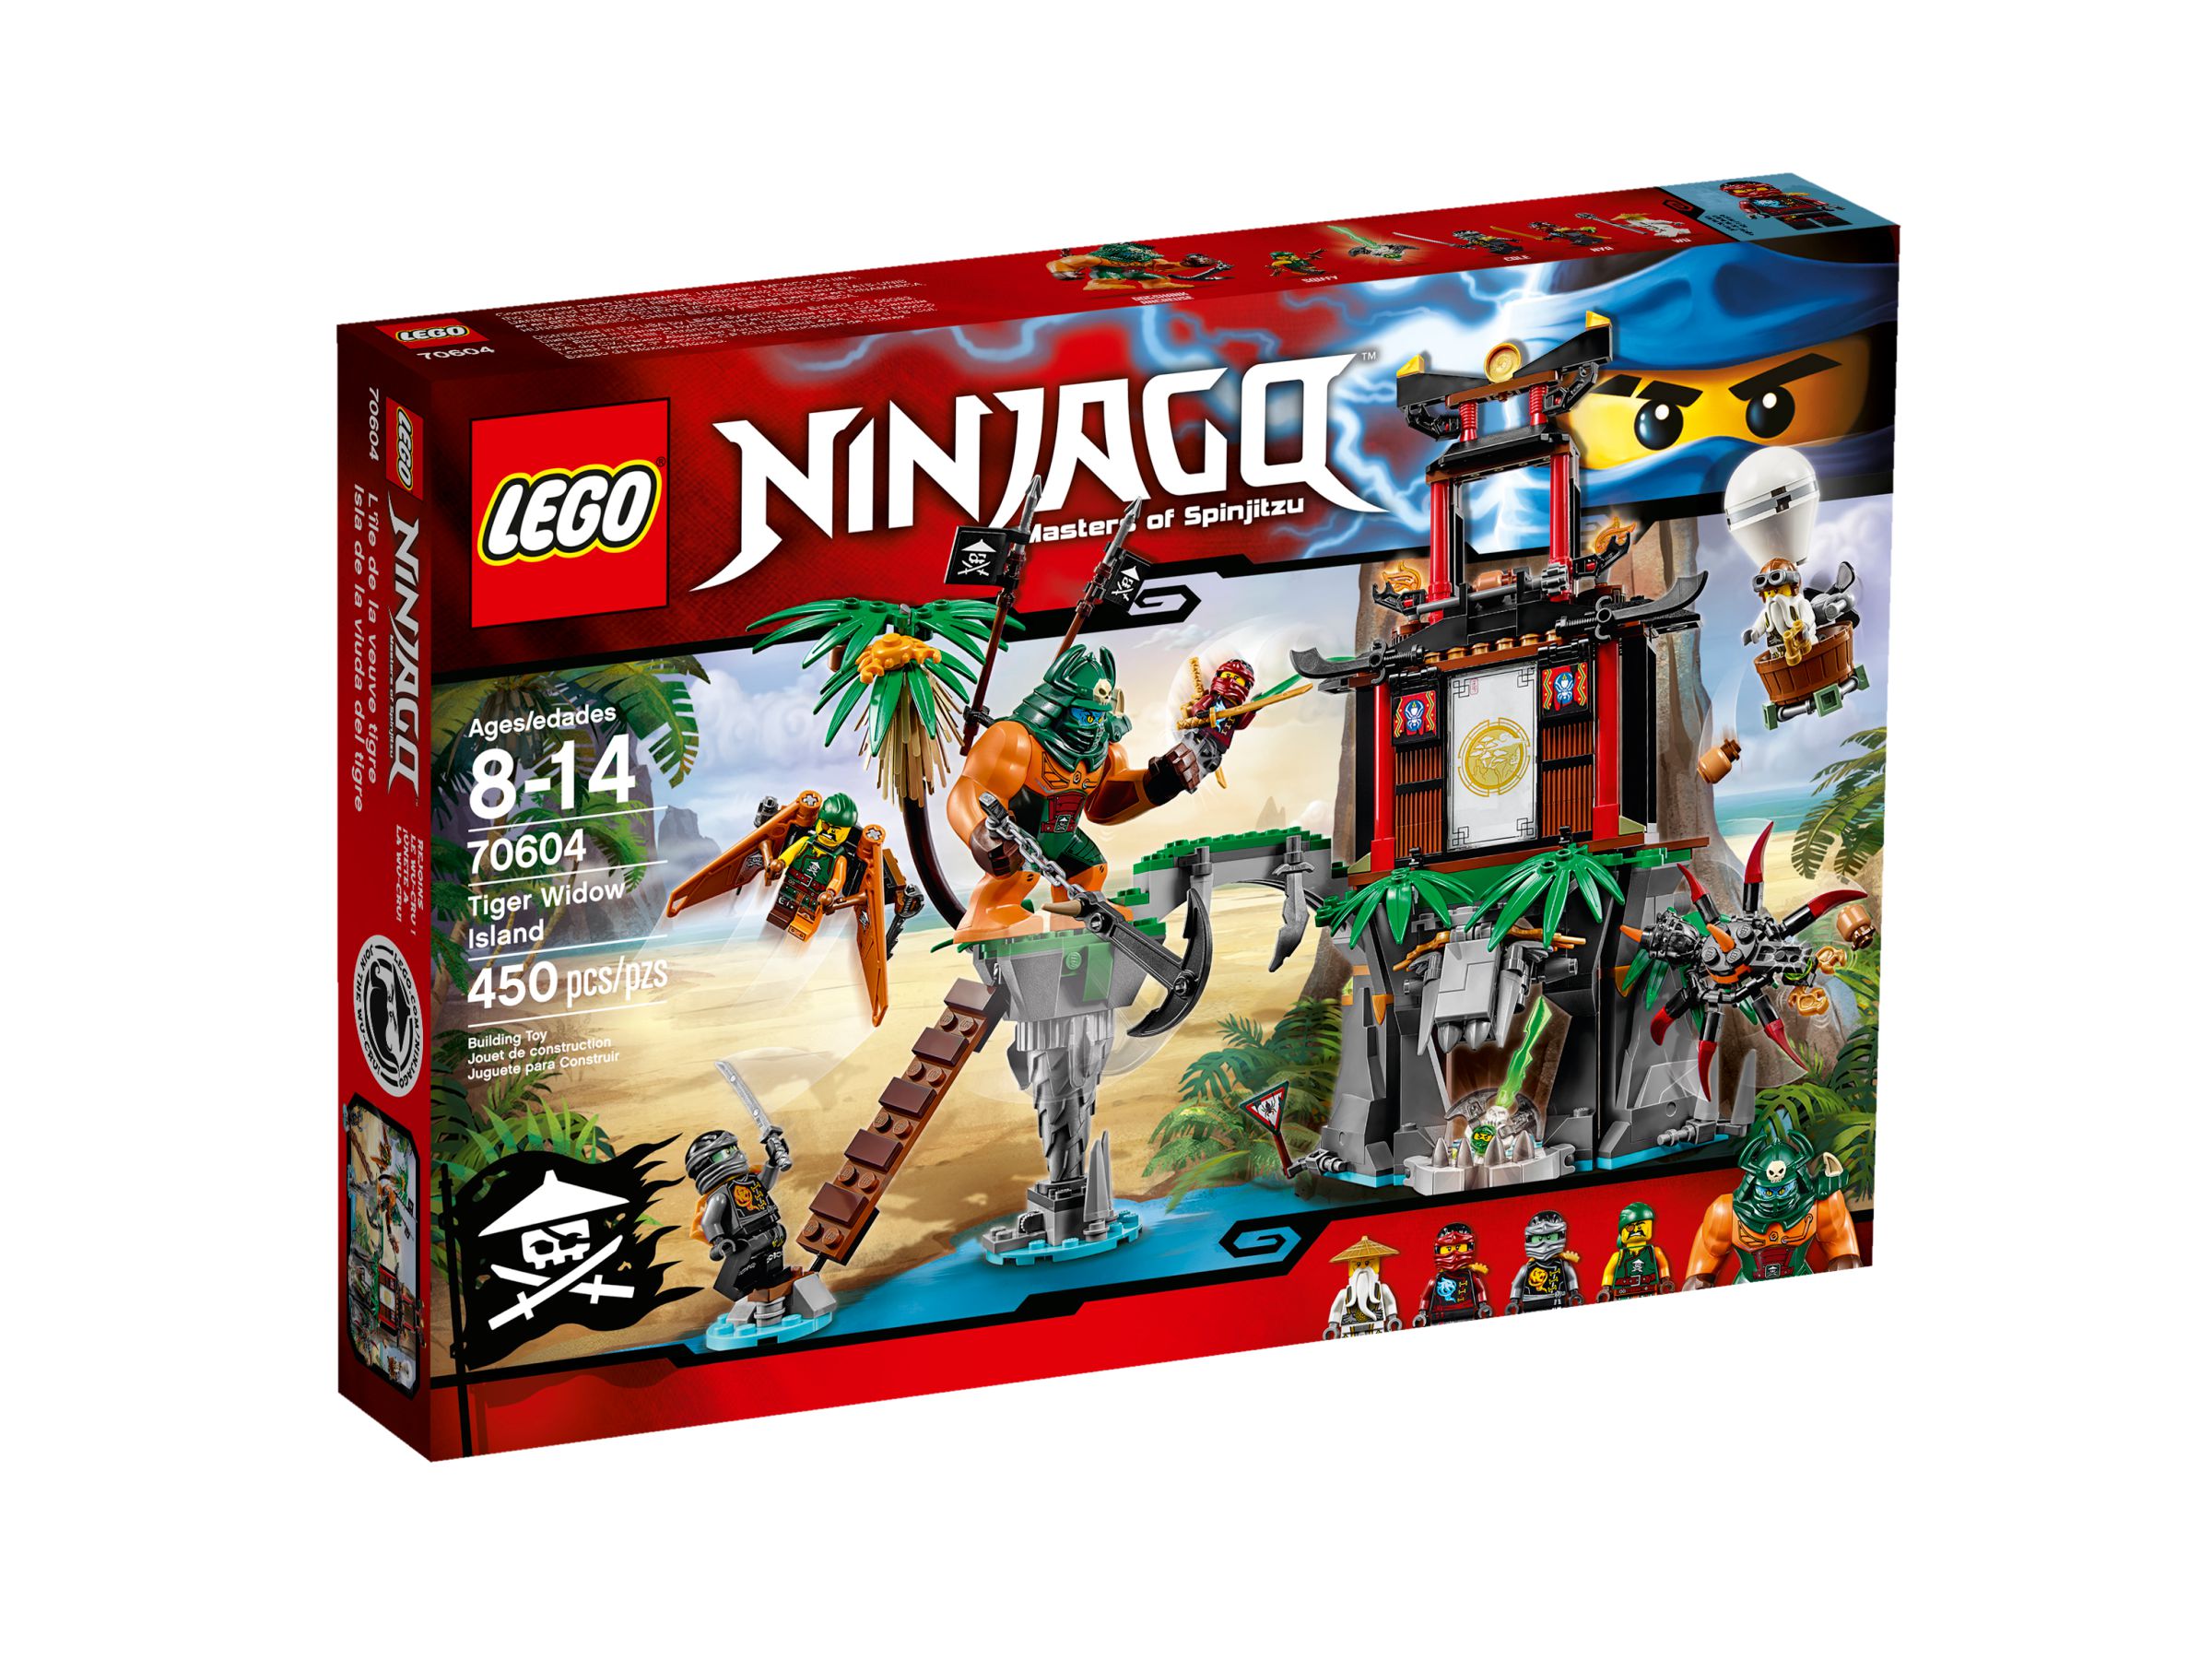 LEGO Ninjago 70604 Schwarze Witwen-Insel LEGO_70604_alt1.jpg